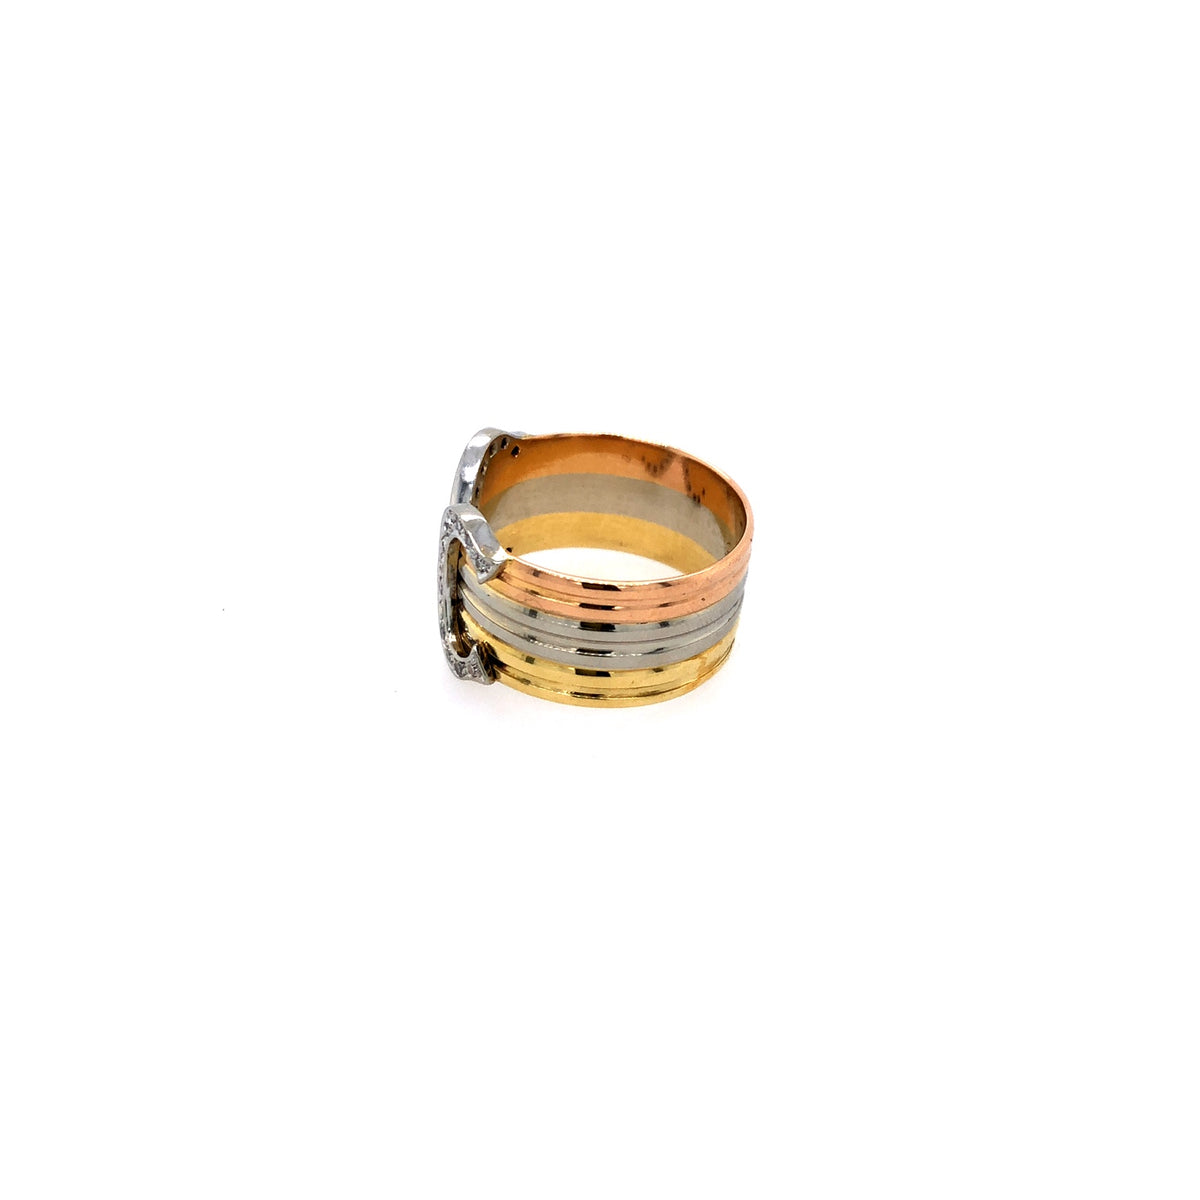 Vintage Cartier Ring Tricolor Gold 750 mit Diamanten